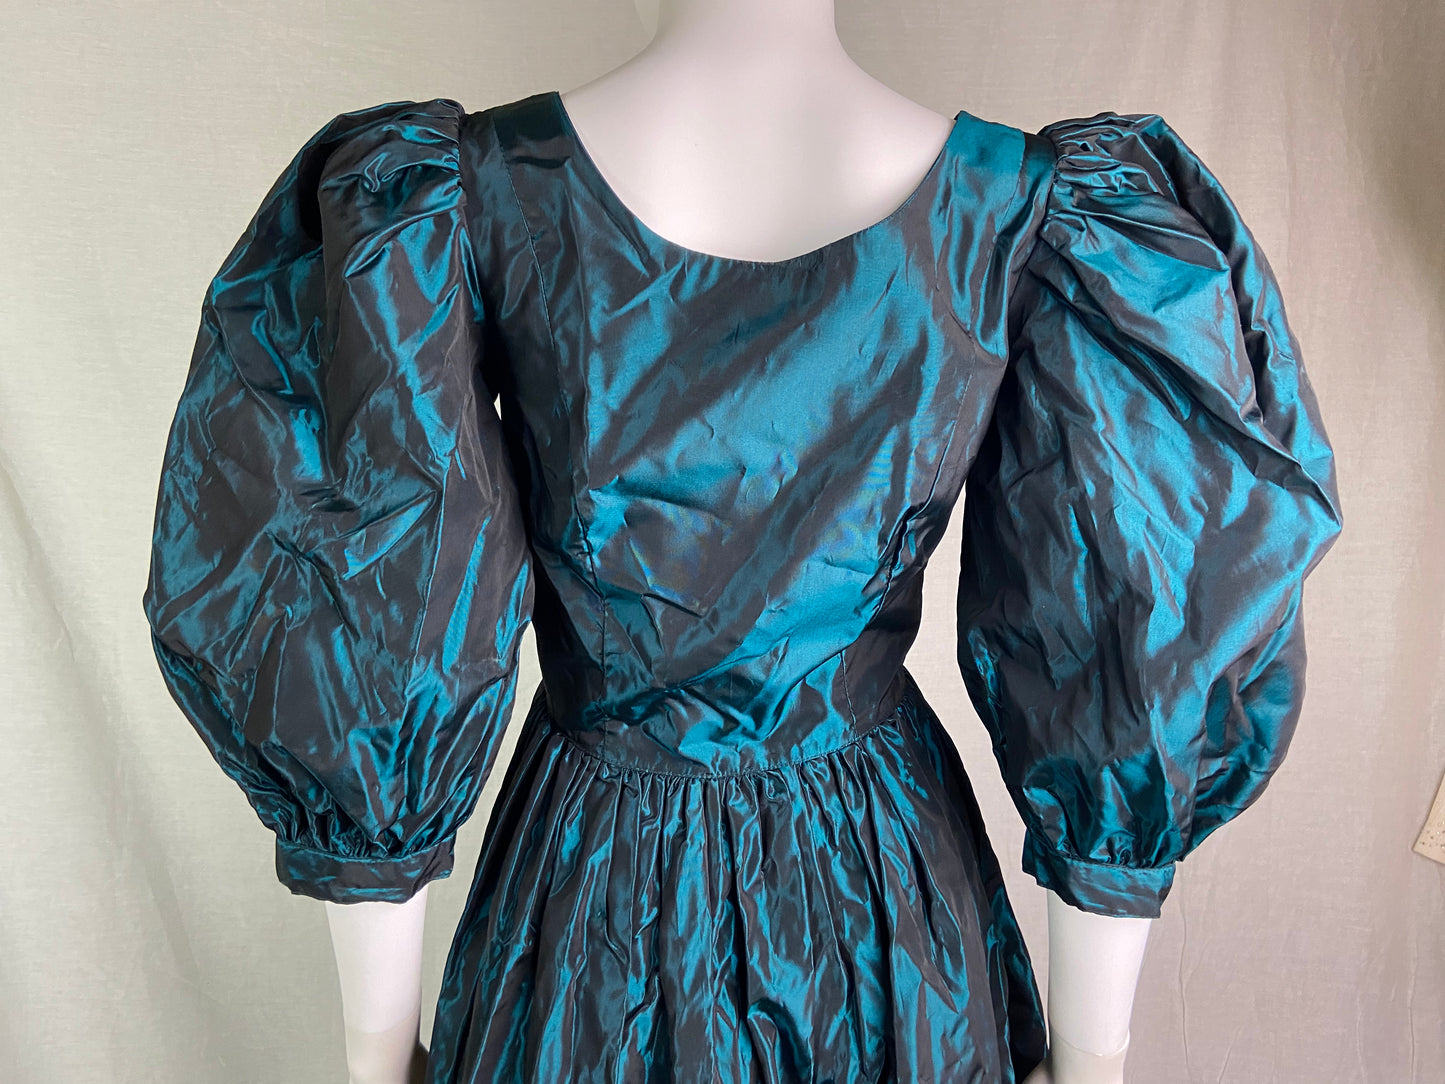 Vintage Laura Ashley Emerald Green Metallic Wrap Princess Gown Dress ABBY ESSIE STUDIOS